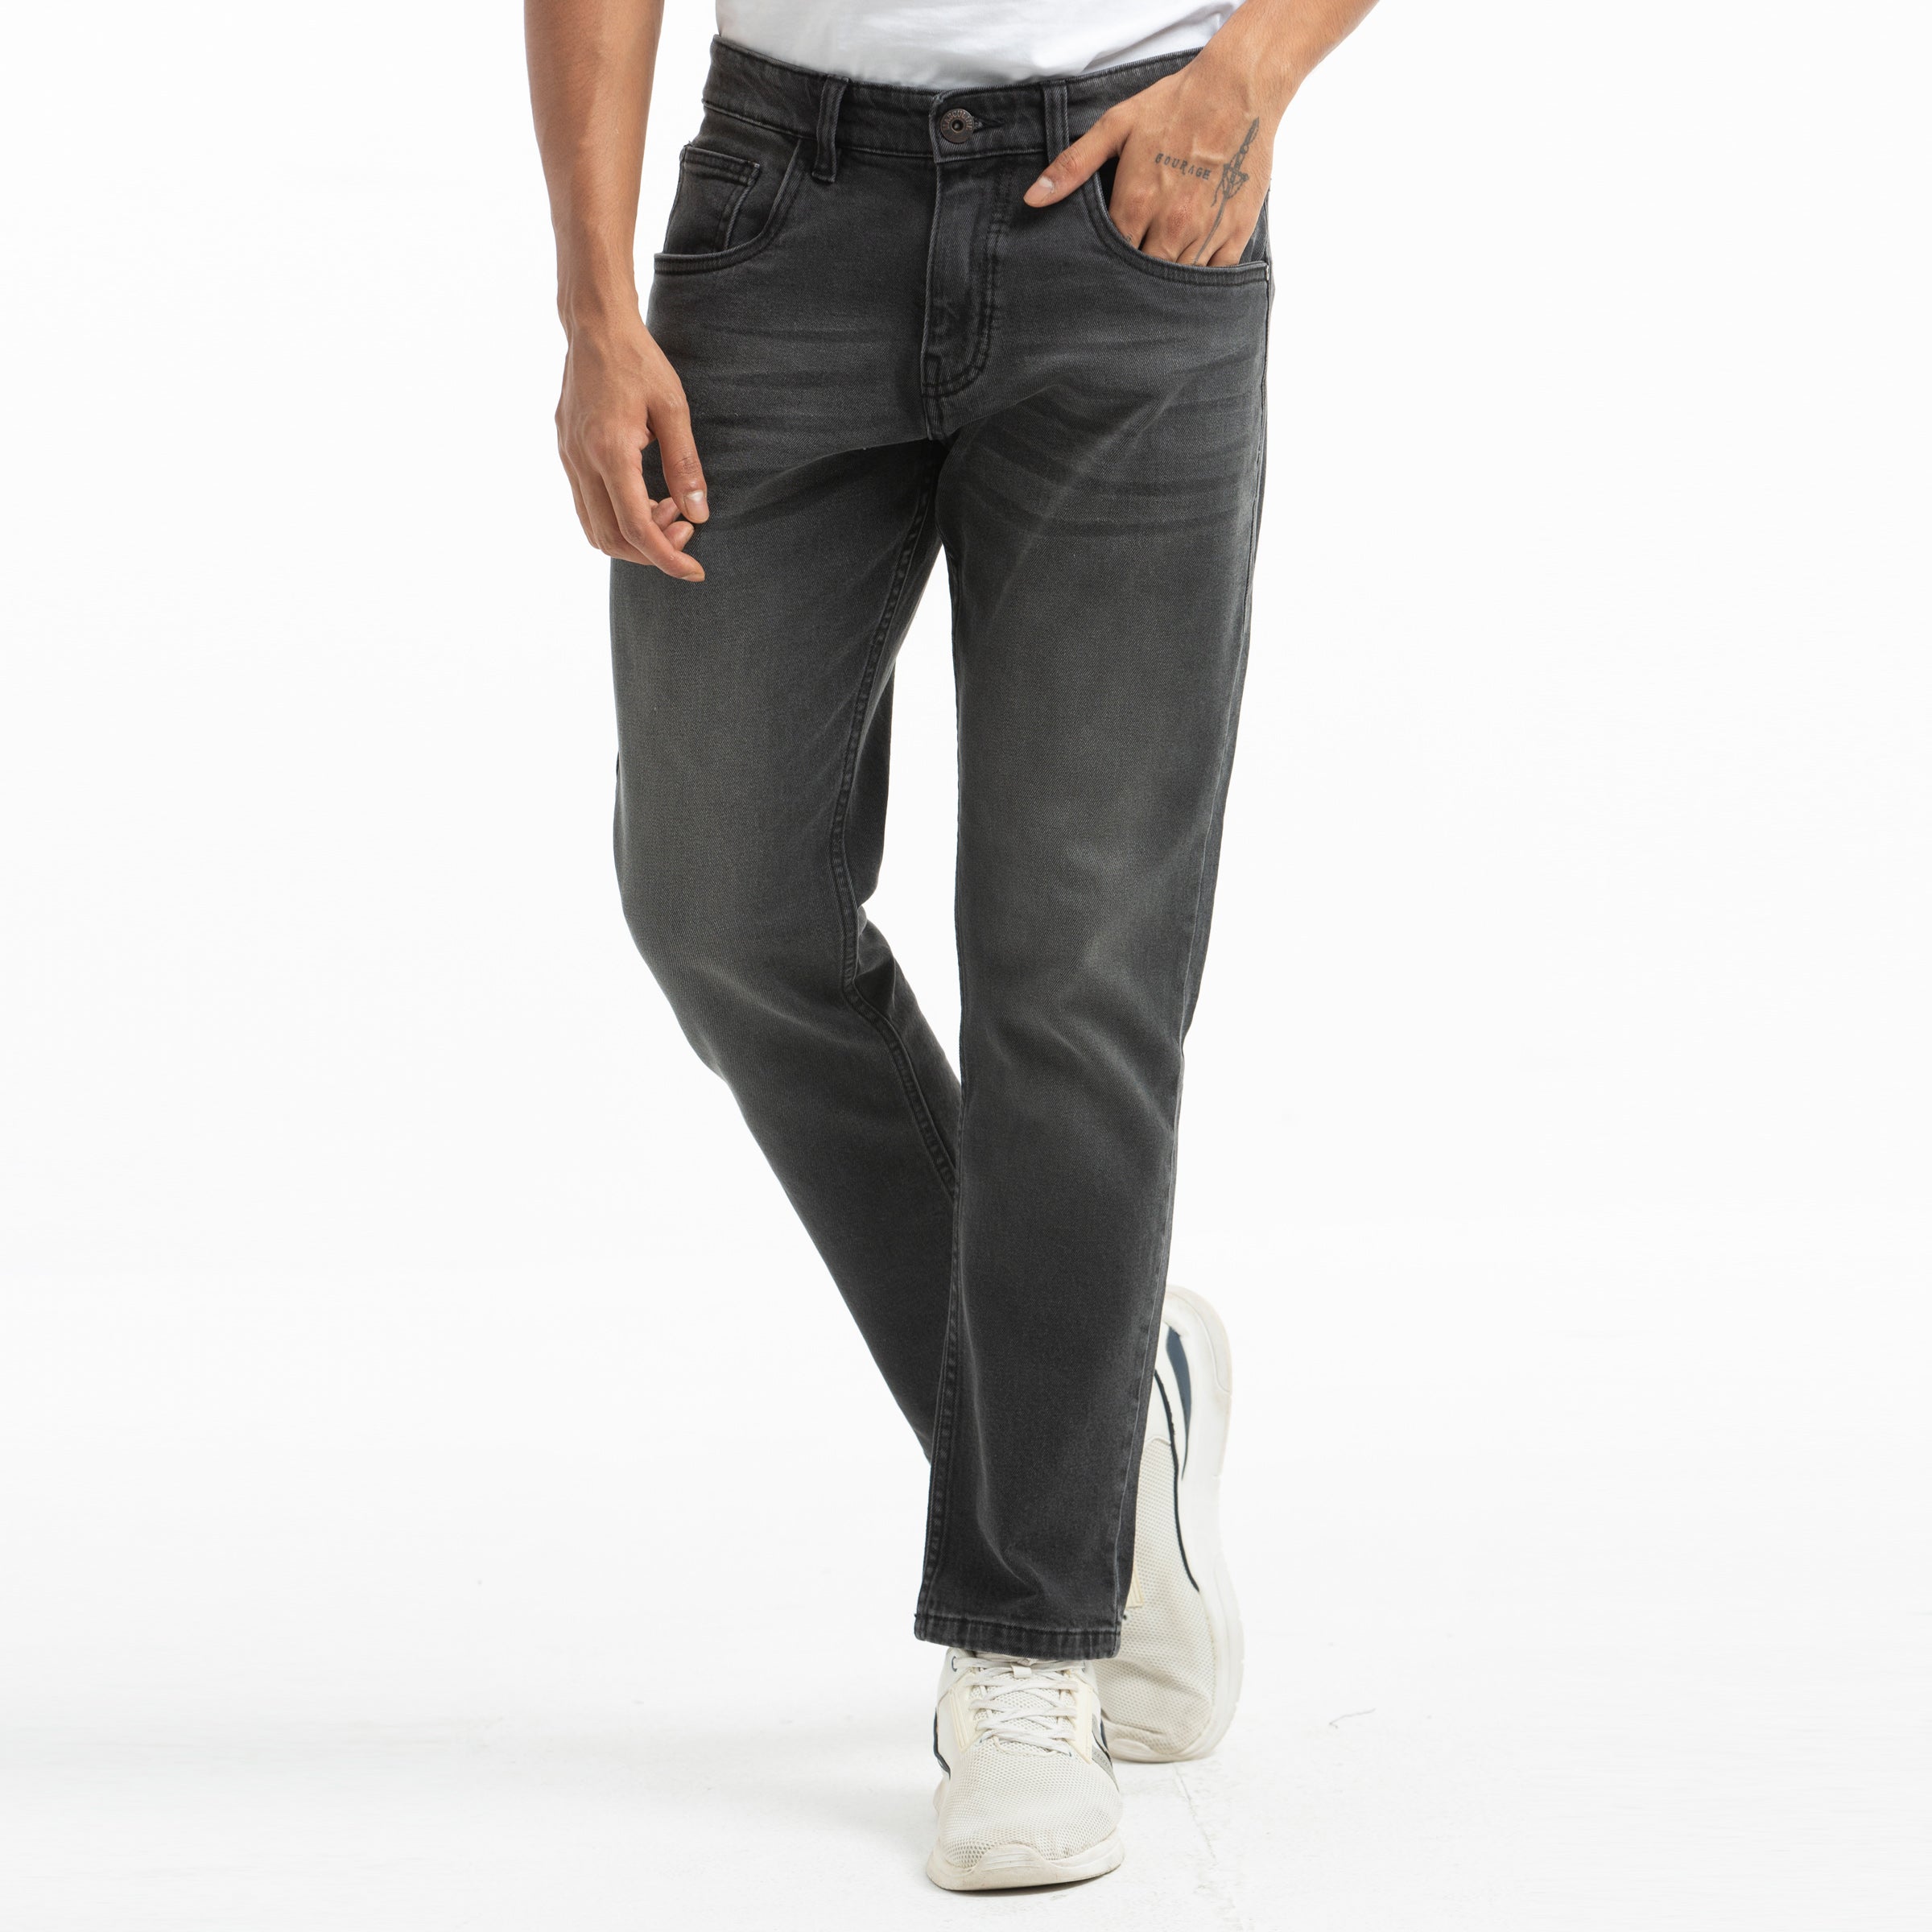 Semi Fit Denim Jeans Stretchable - charcoal black